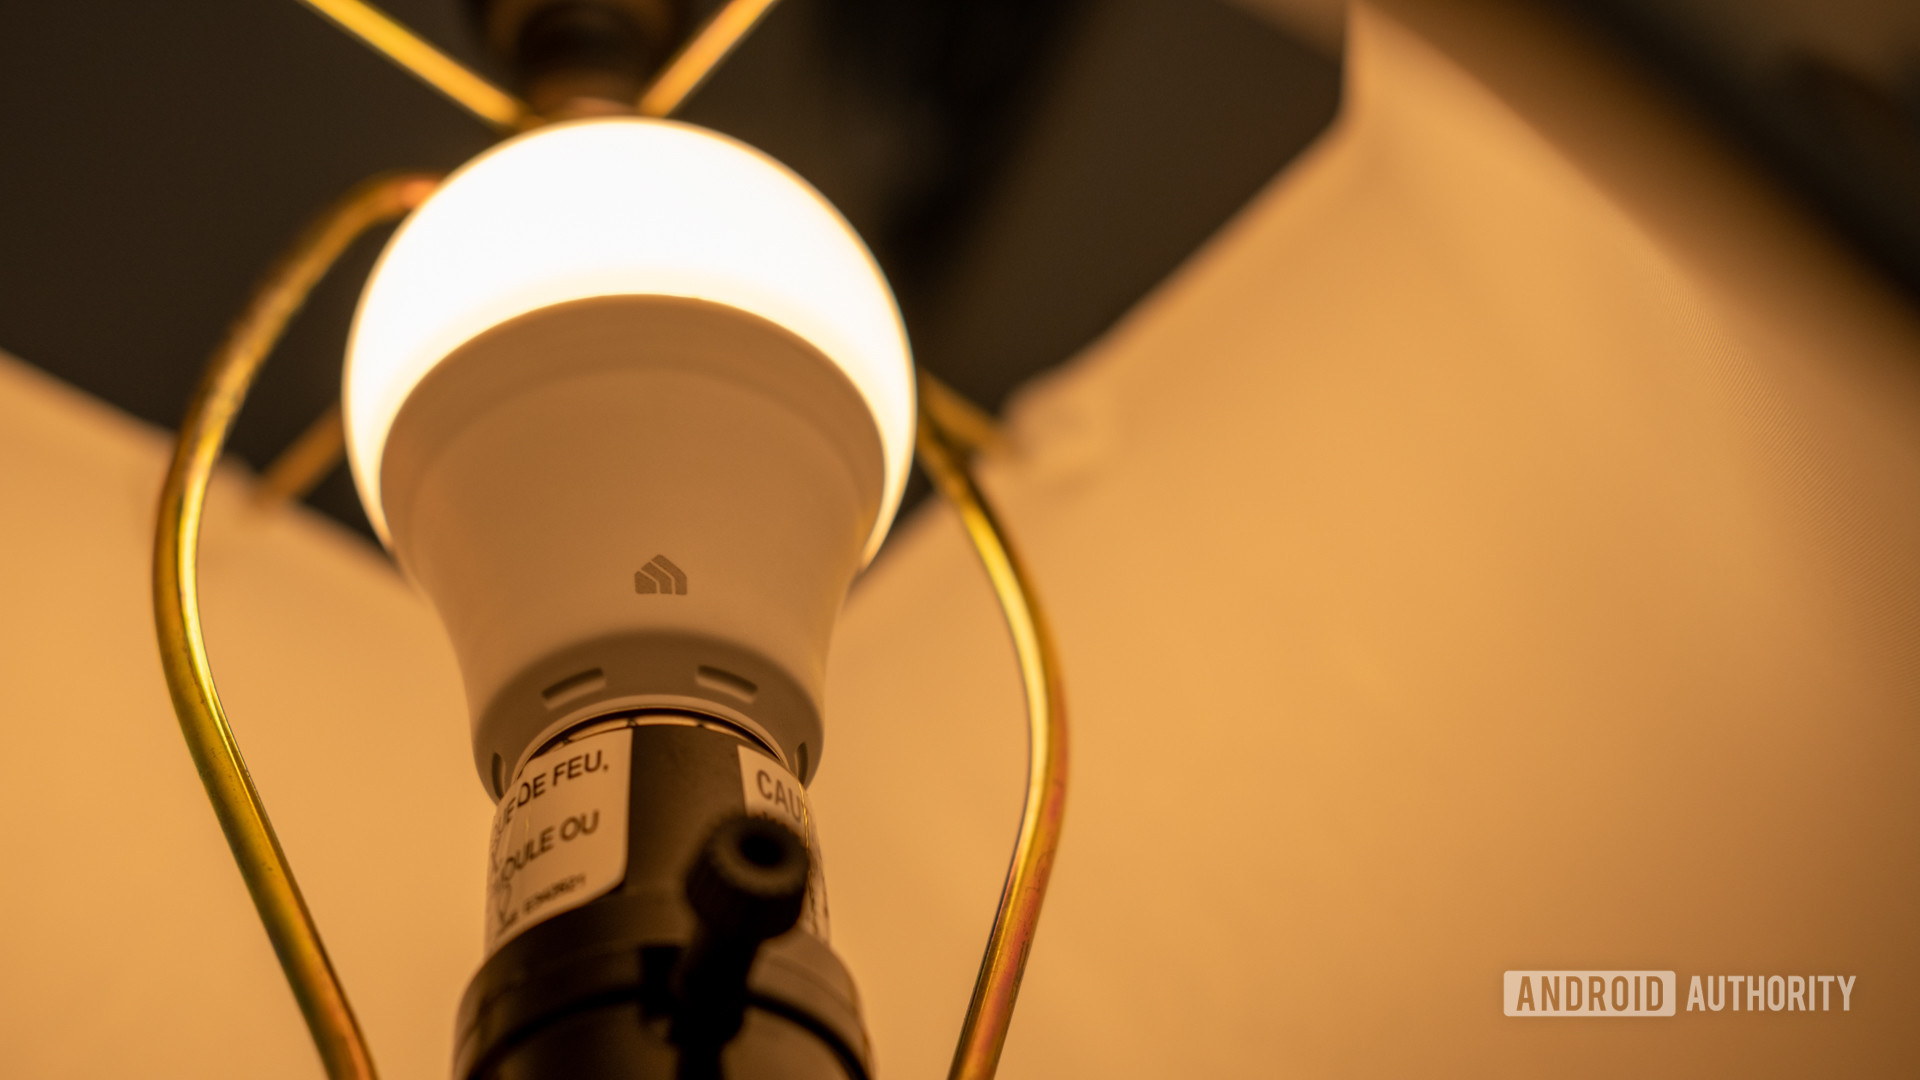 A close up image of the TP-Link Kasa Smart light bulb showing the Kasa Smart logo